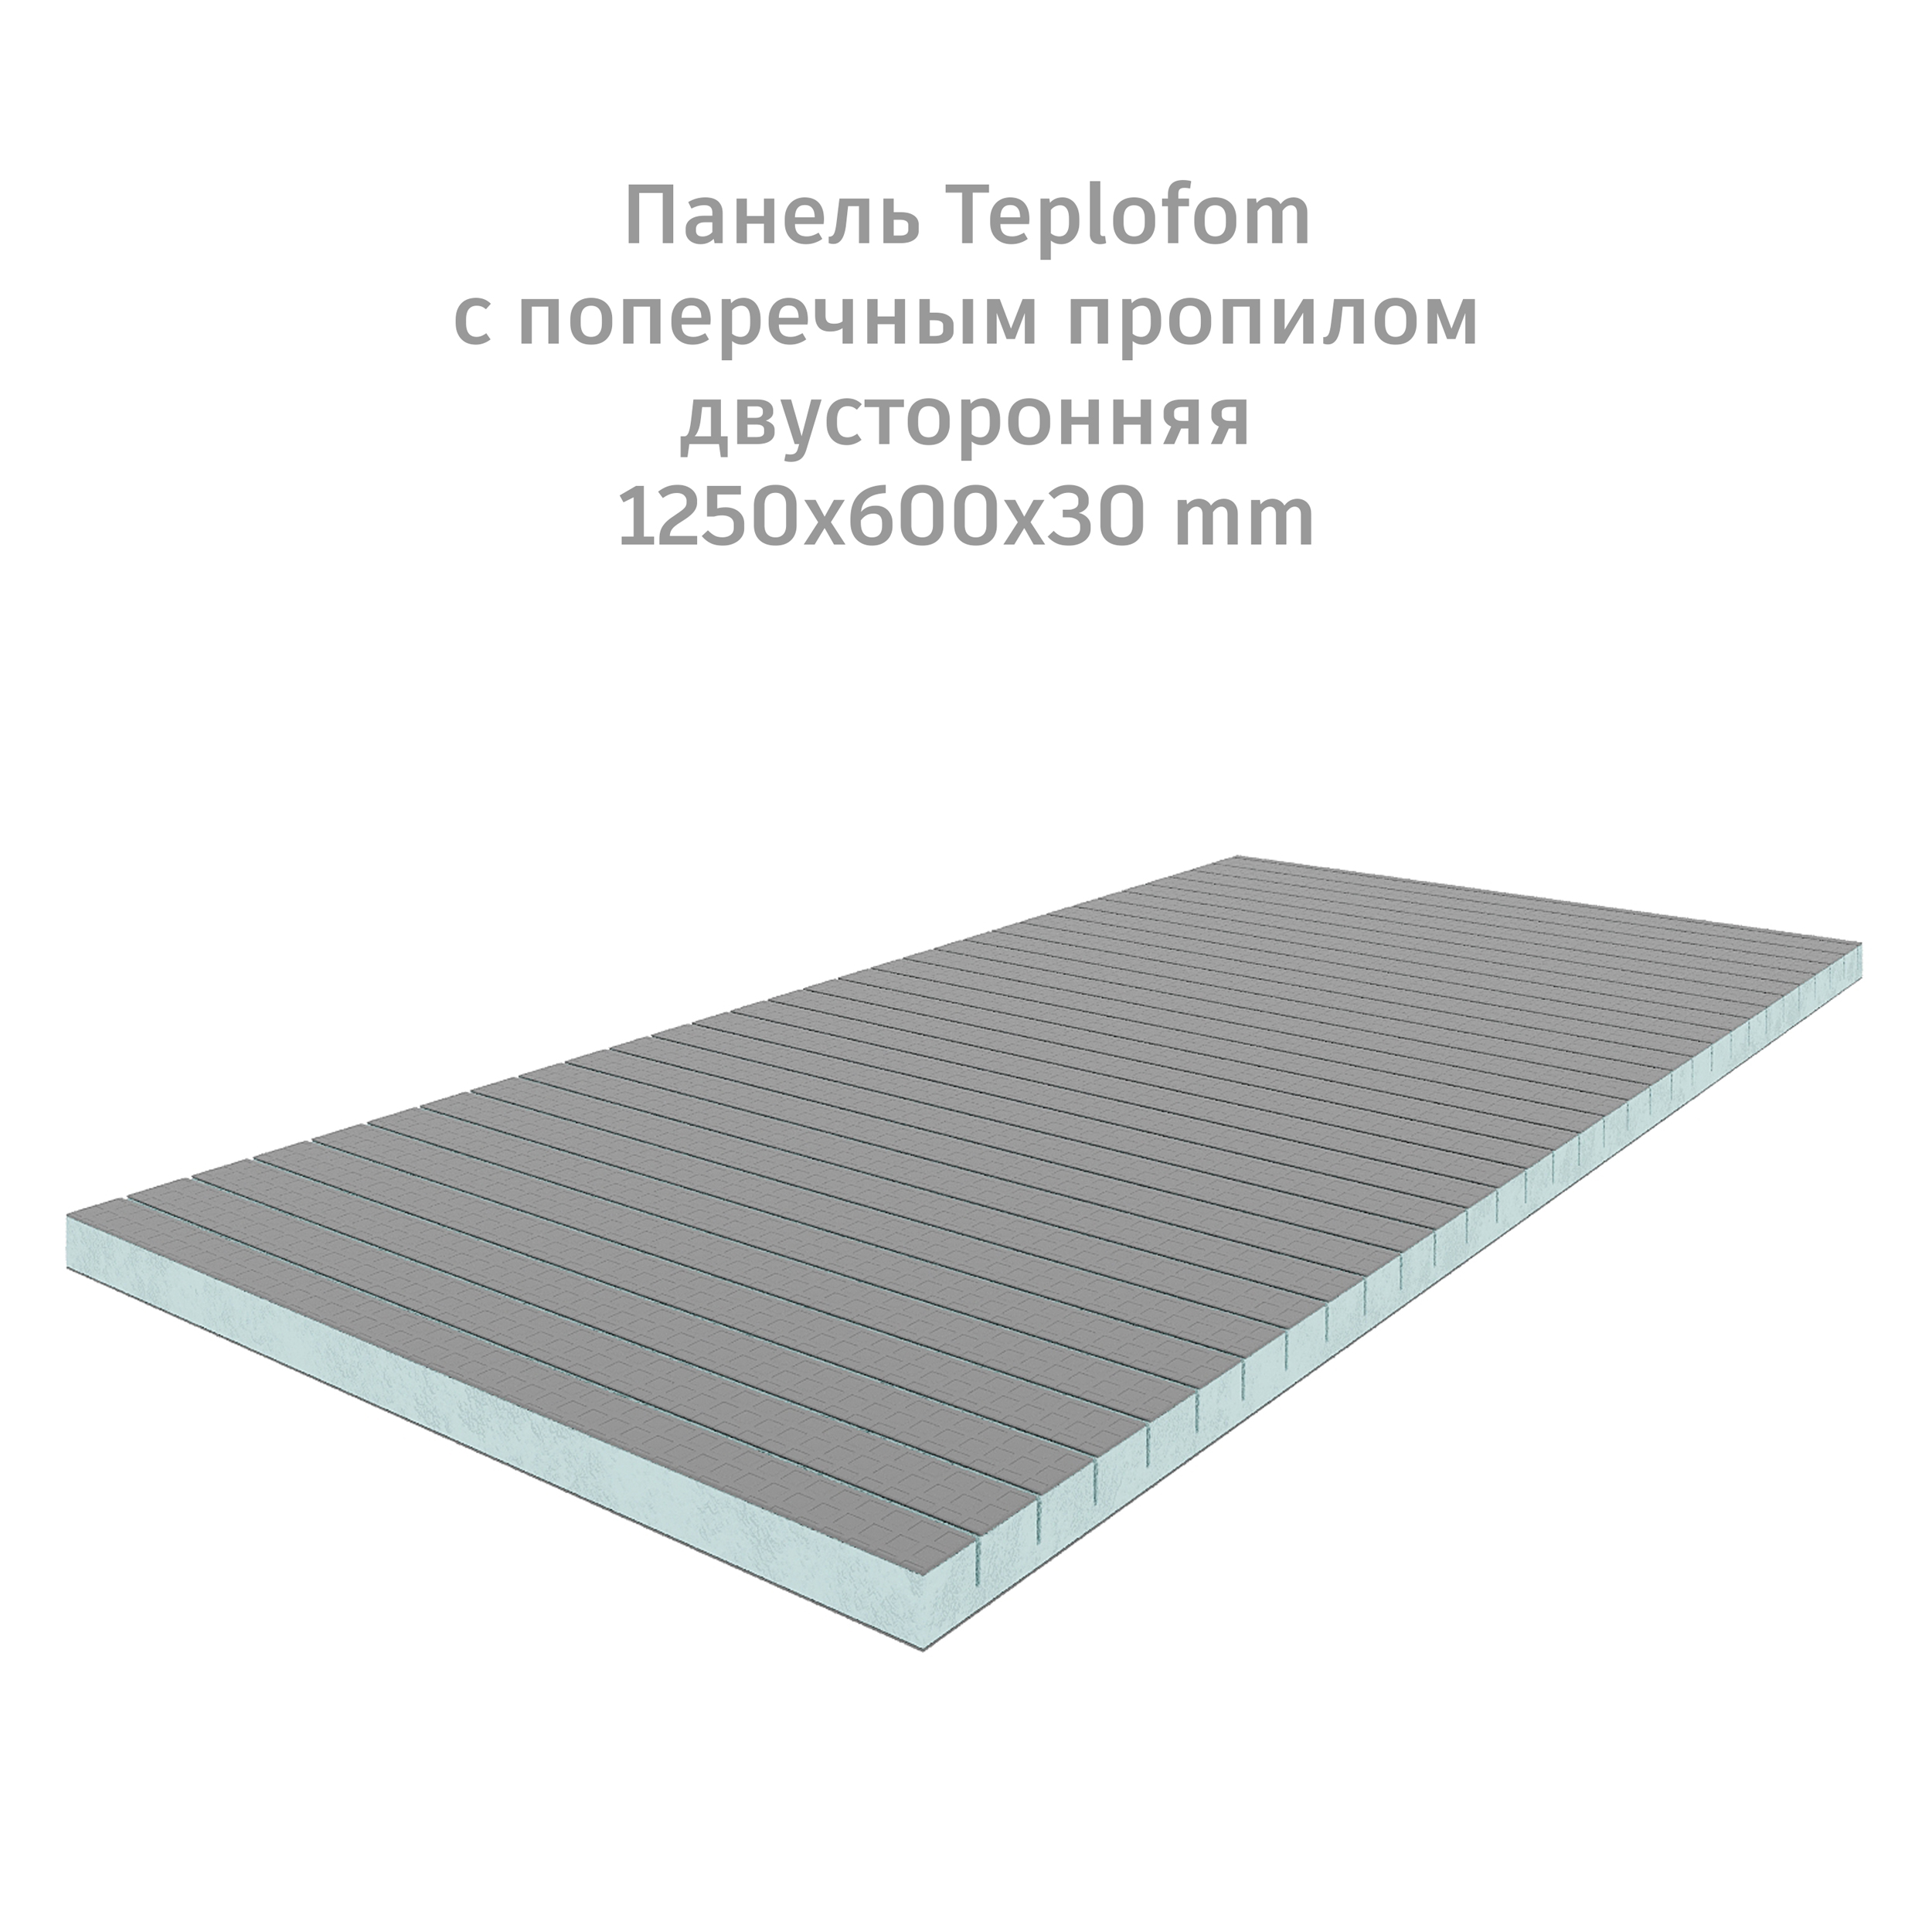 Теплоизоляционная панель TEPLOFOM+30 XPS-02 (двухсторонний слой) 1250x600x30мм поперечный